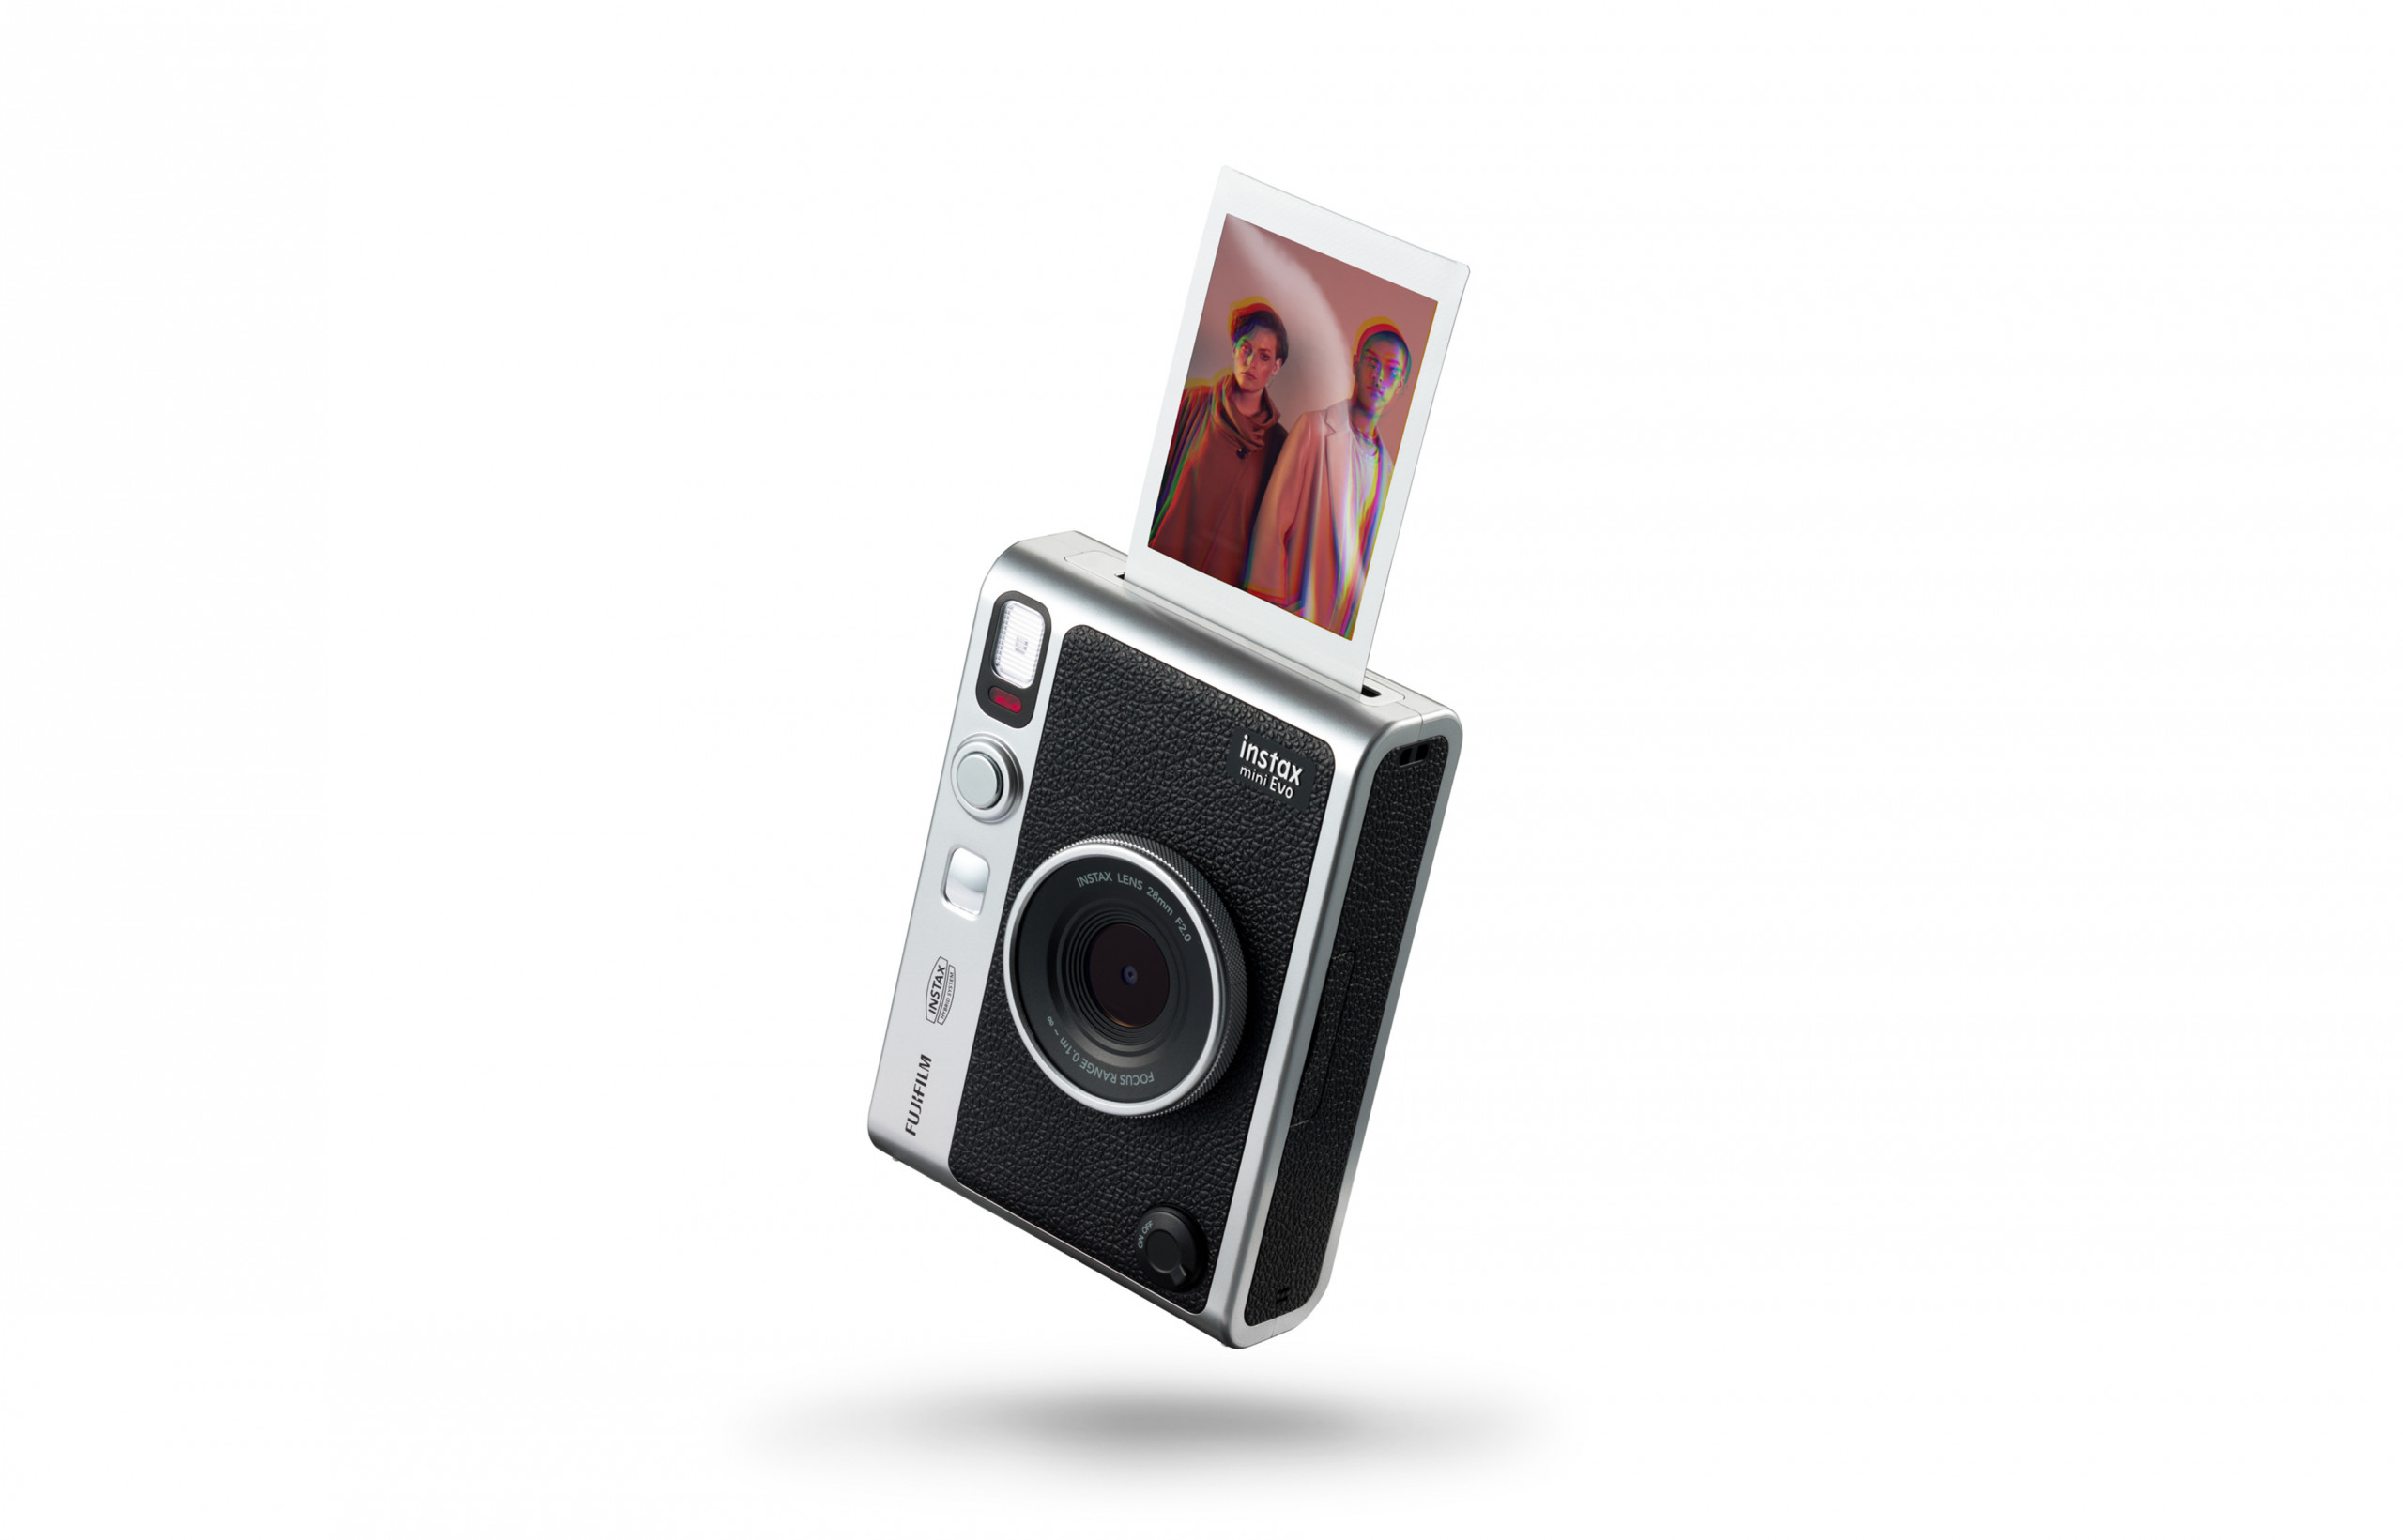 Fujifilm Instax Mini 12 : le best seller des appareils photos instantanés ?